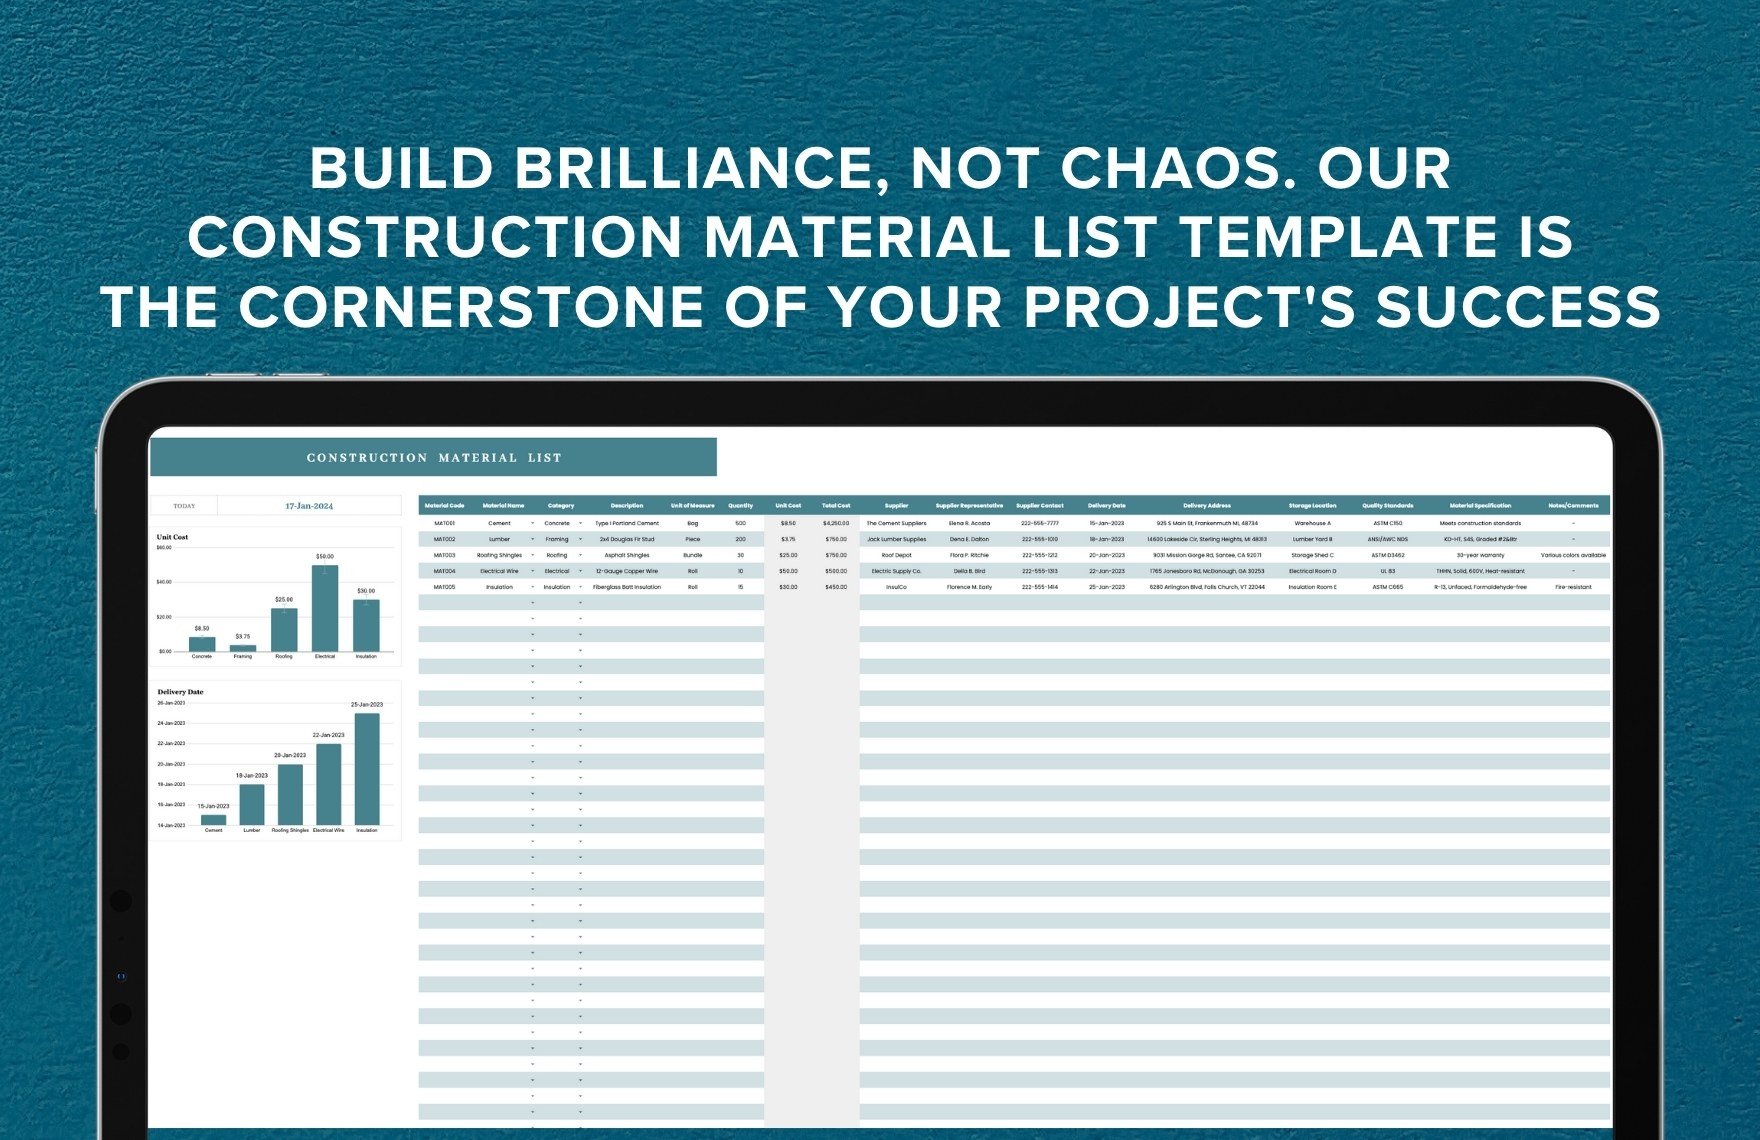 Construction Material List Template